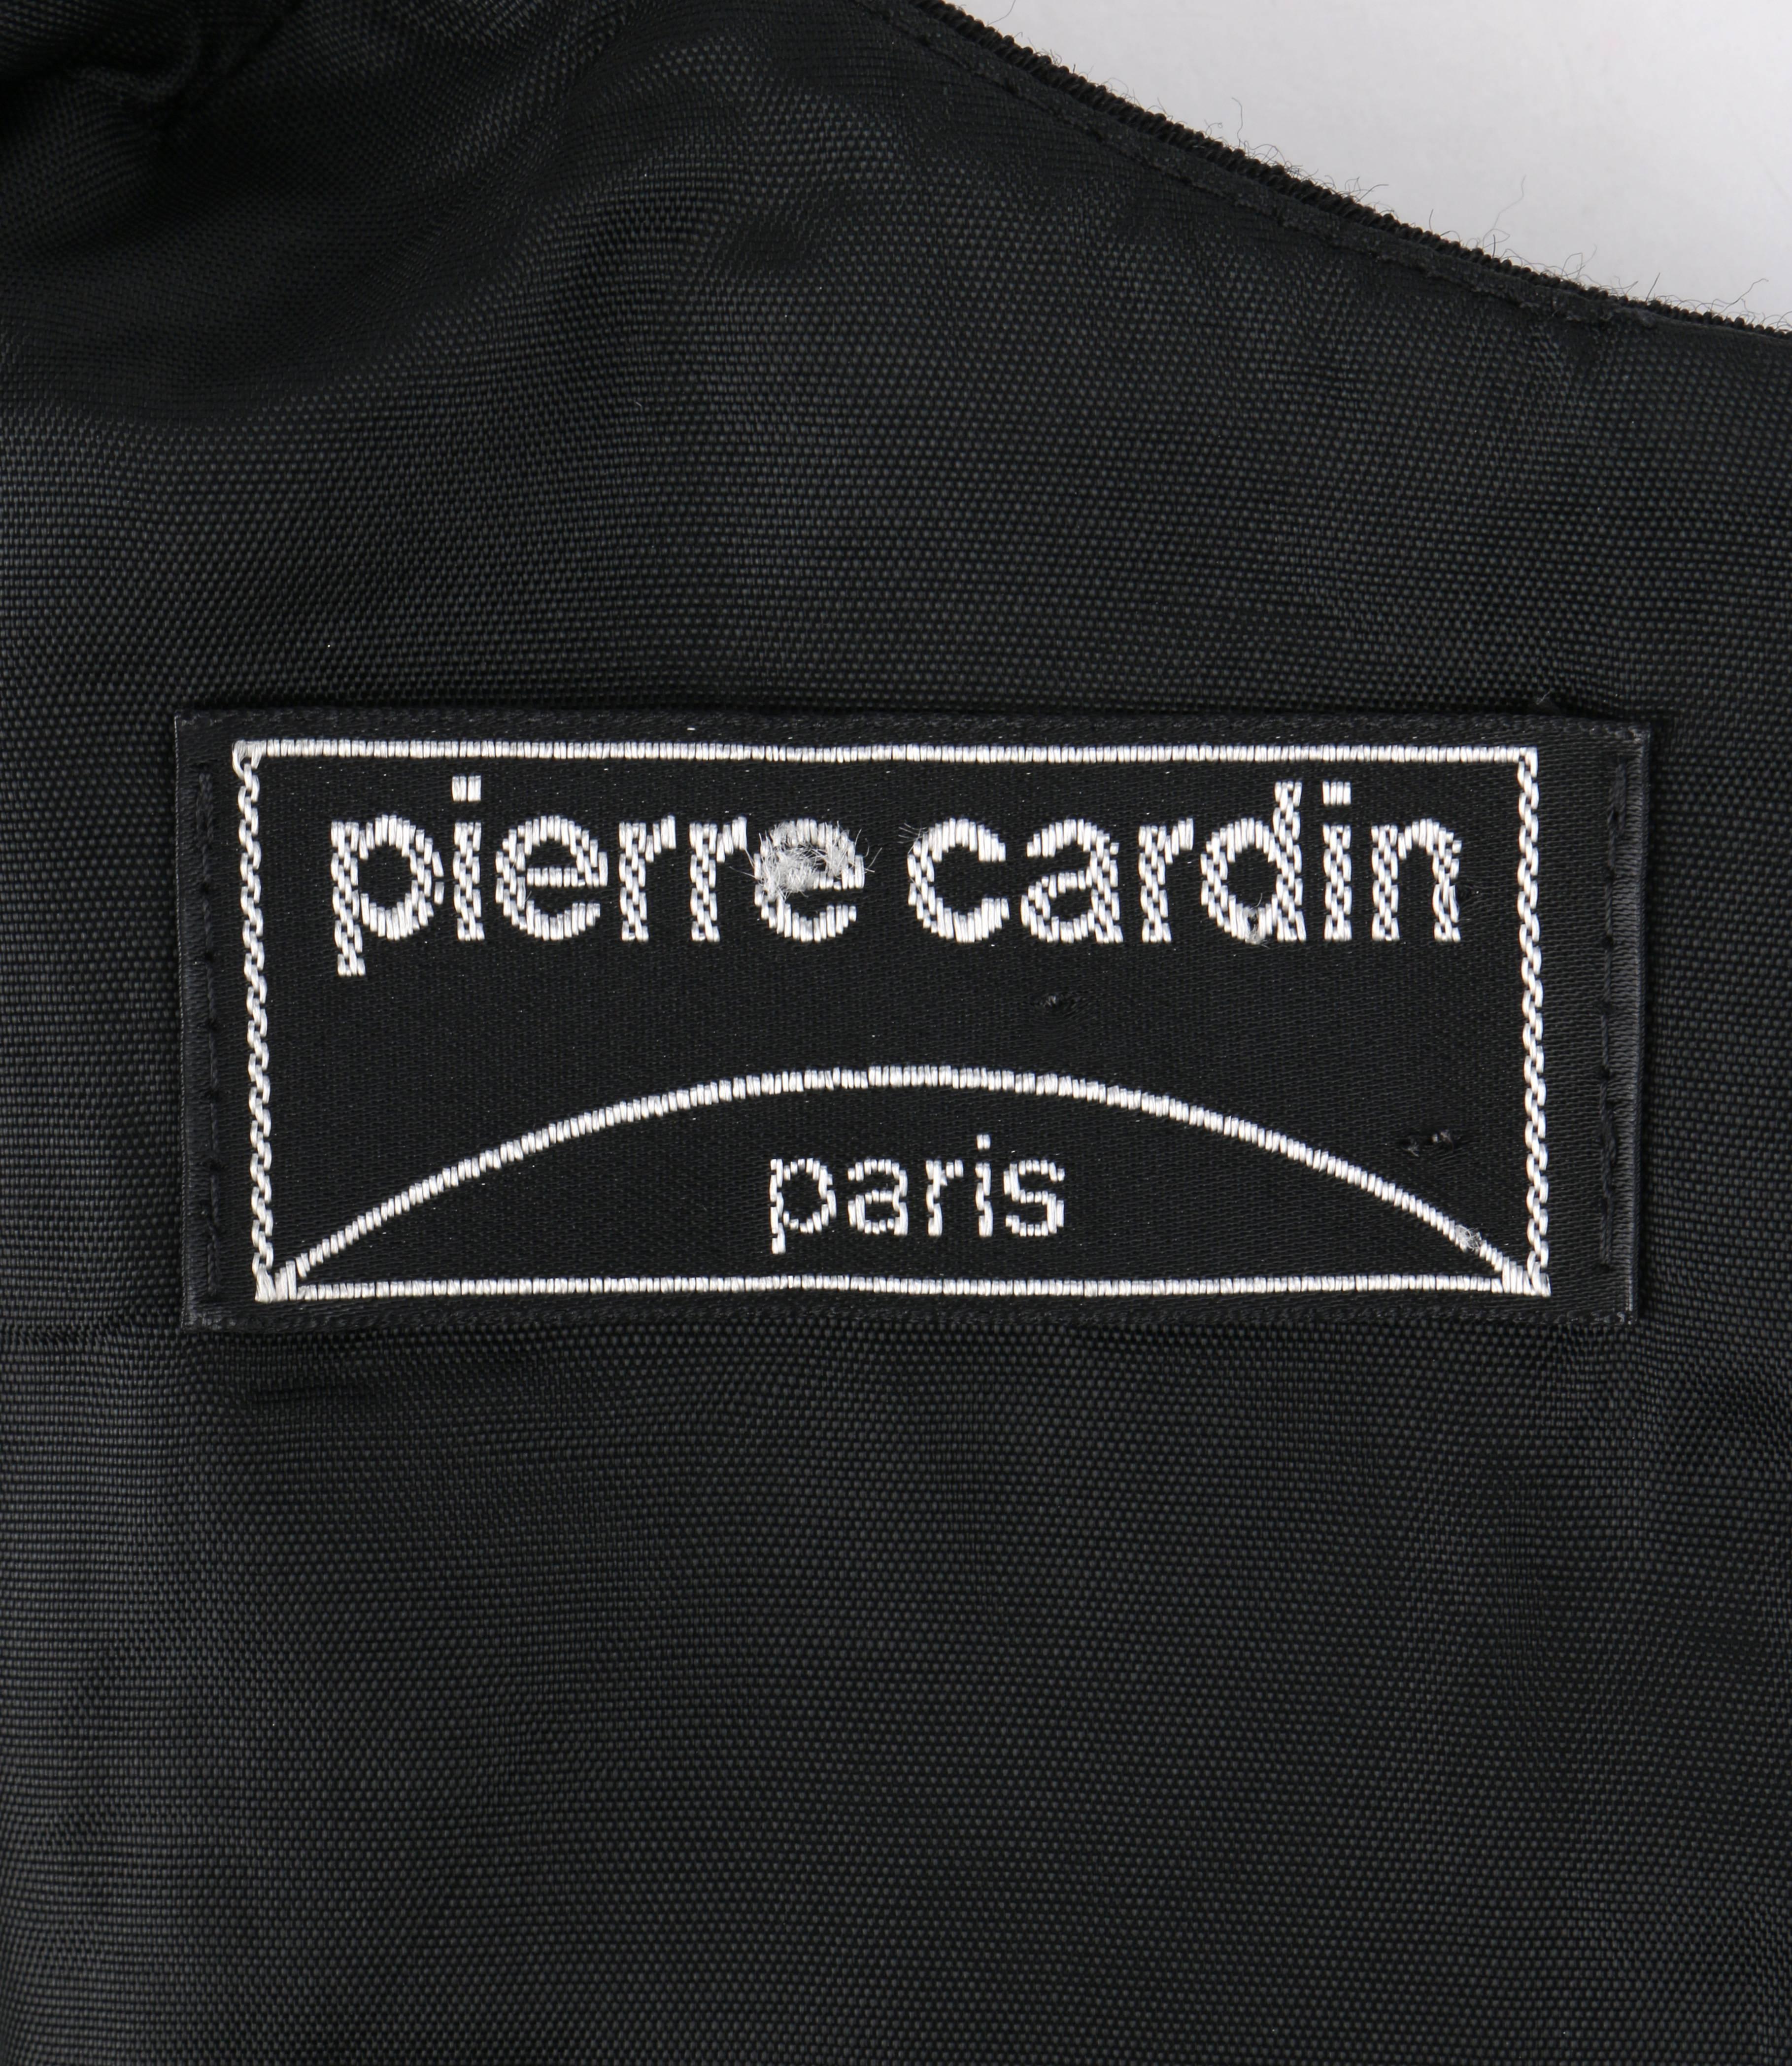 PIERRE CARDIN c.1980's Black & Ivory Color-Block Wool Long Sleeve Shift Dress For Sale 2